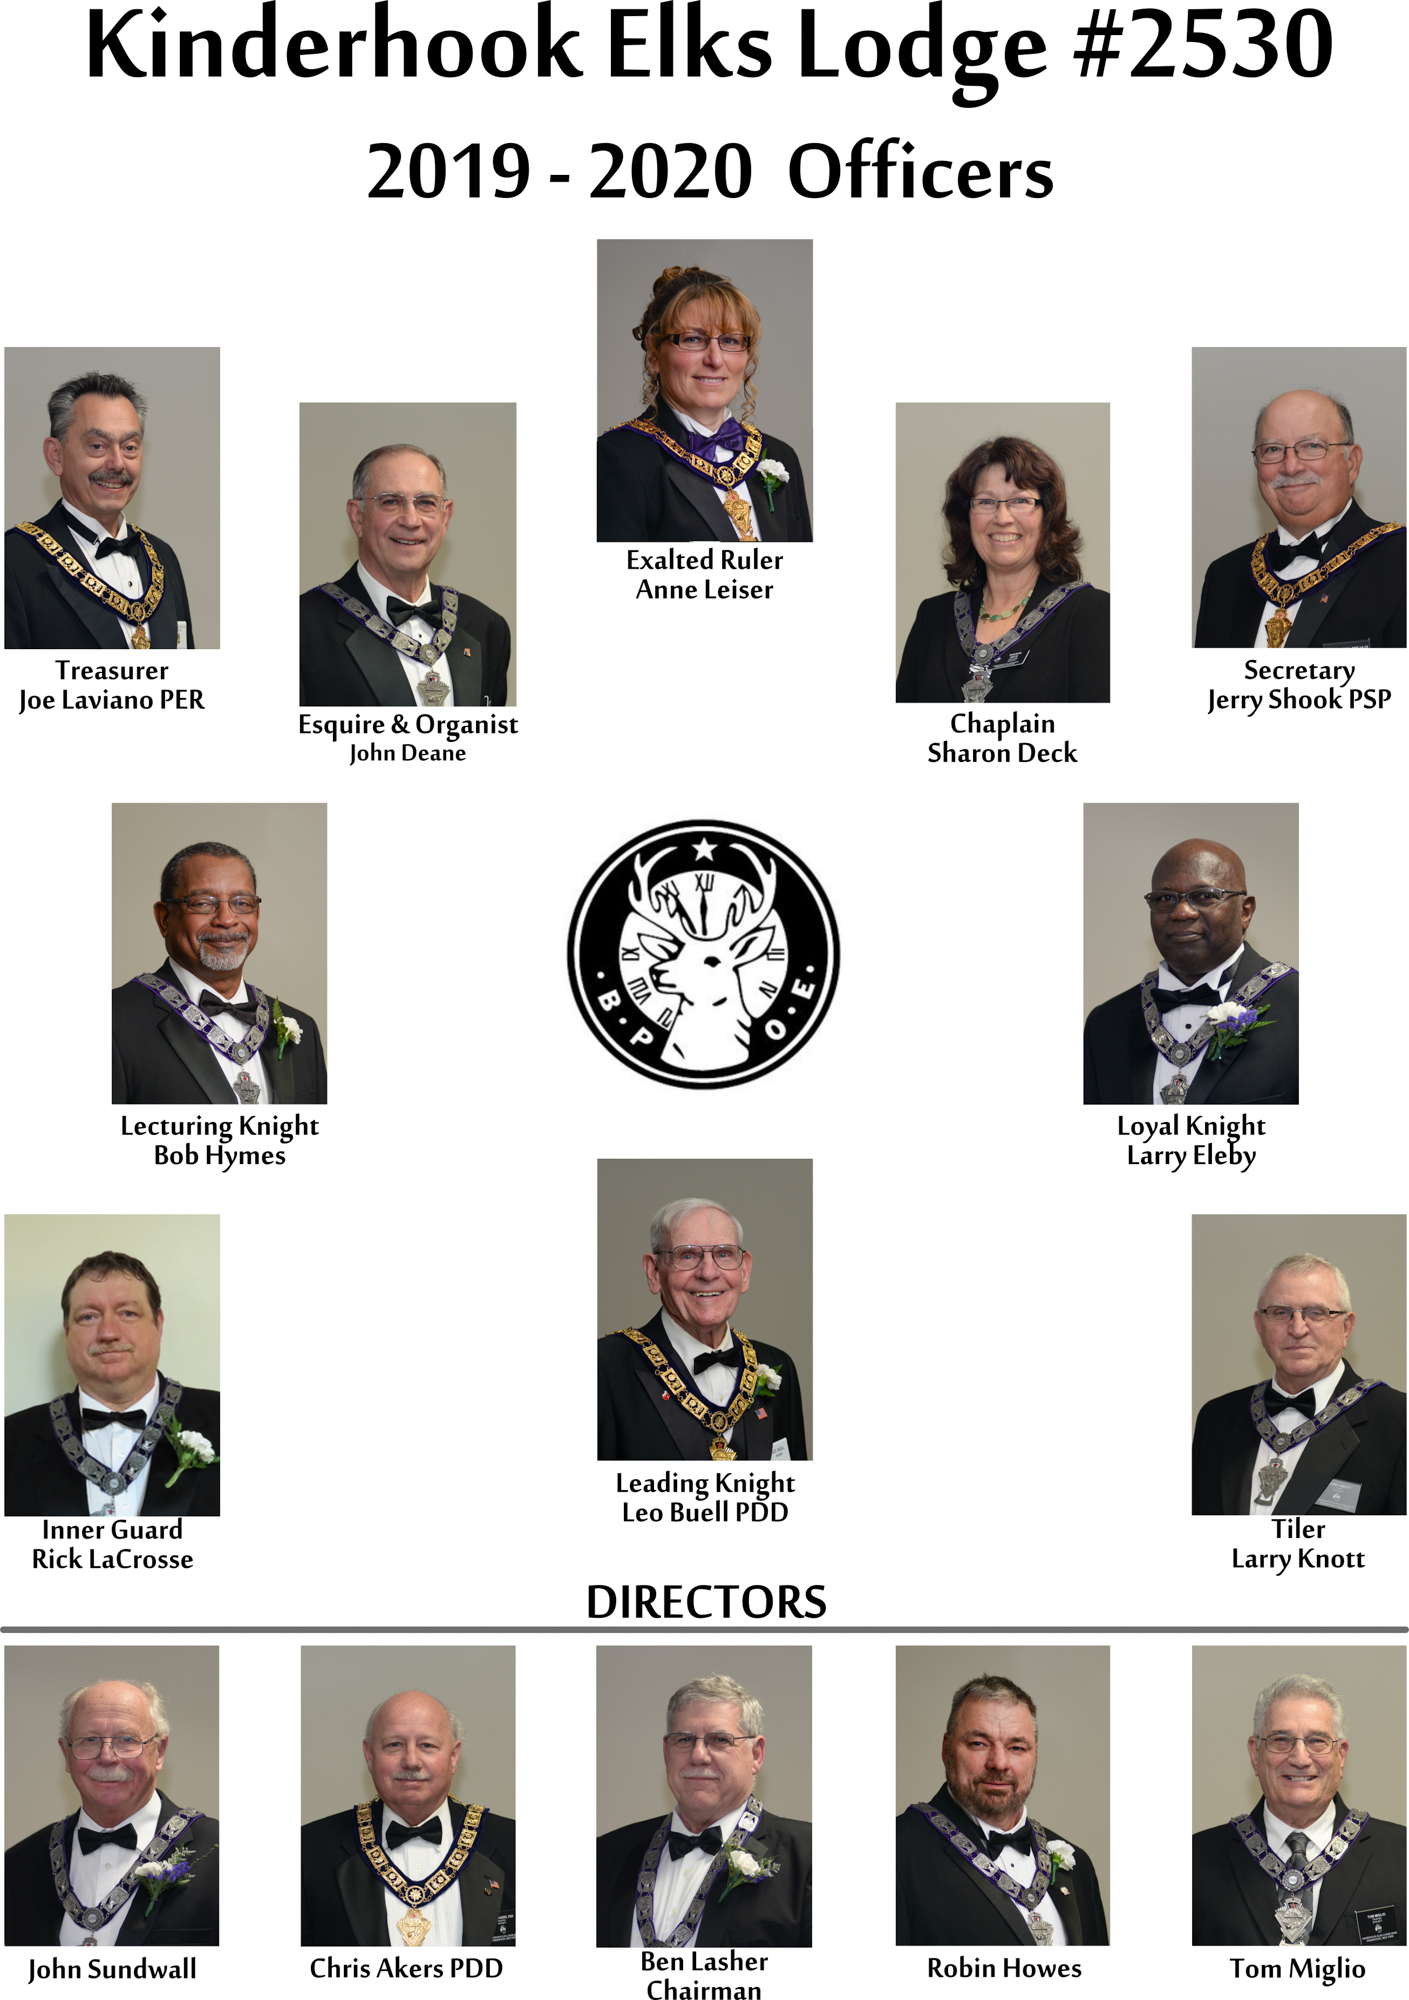 Kinderhook Elks Lodge Officers 2019